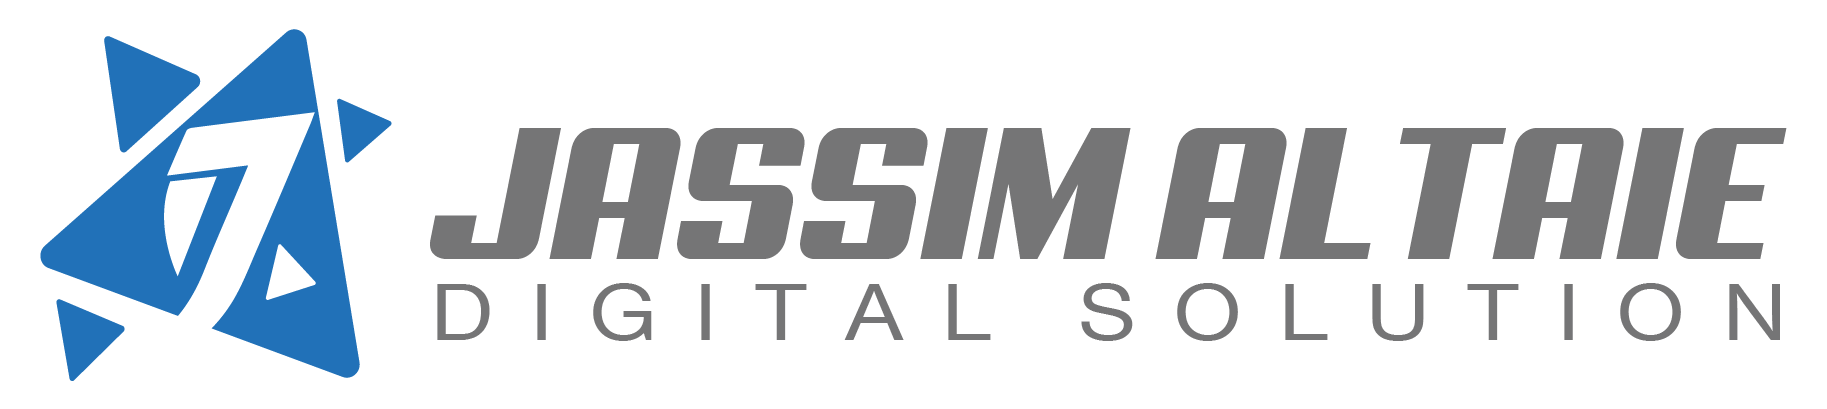 Jassim Altaie | Digital Solutions